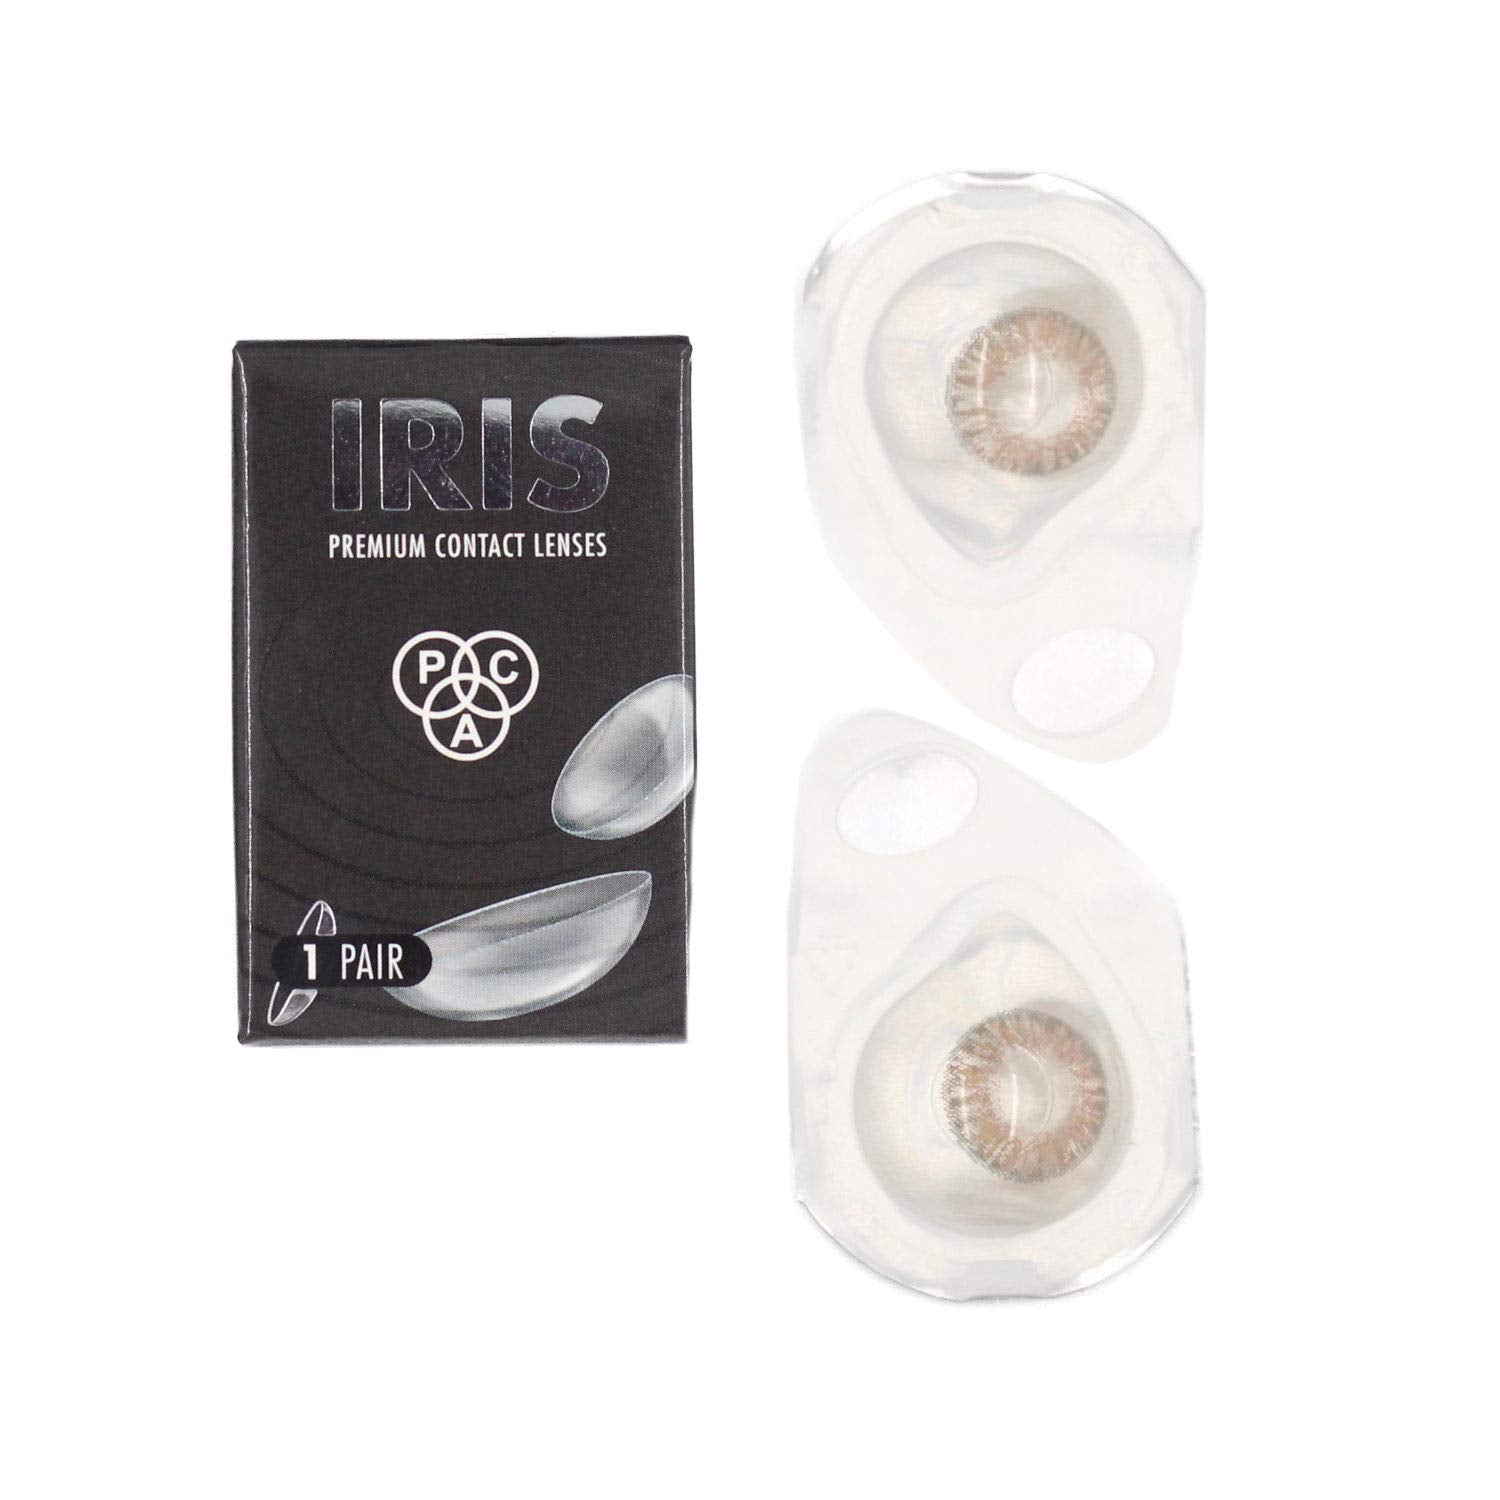 PAC IRIS Contact Lenses - Brown (1 Pair) PAC